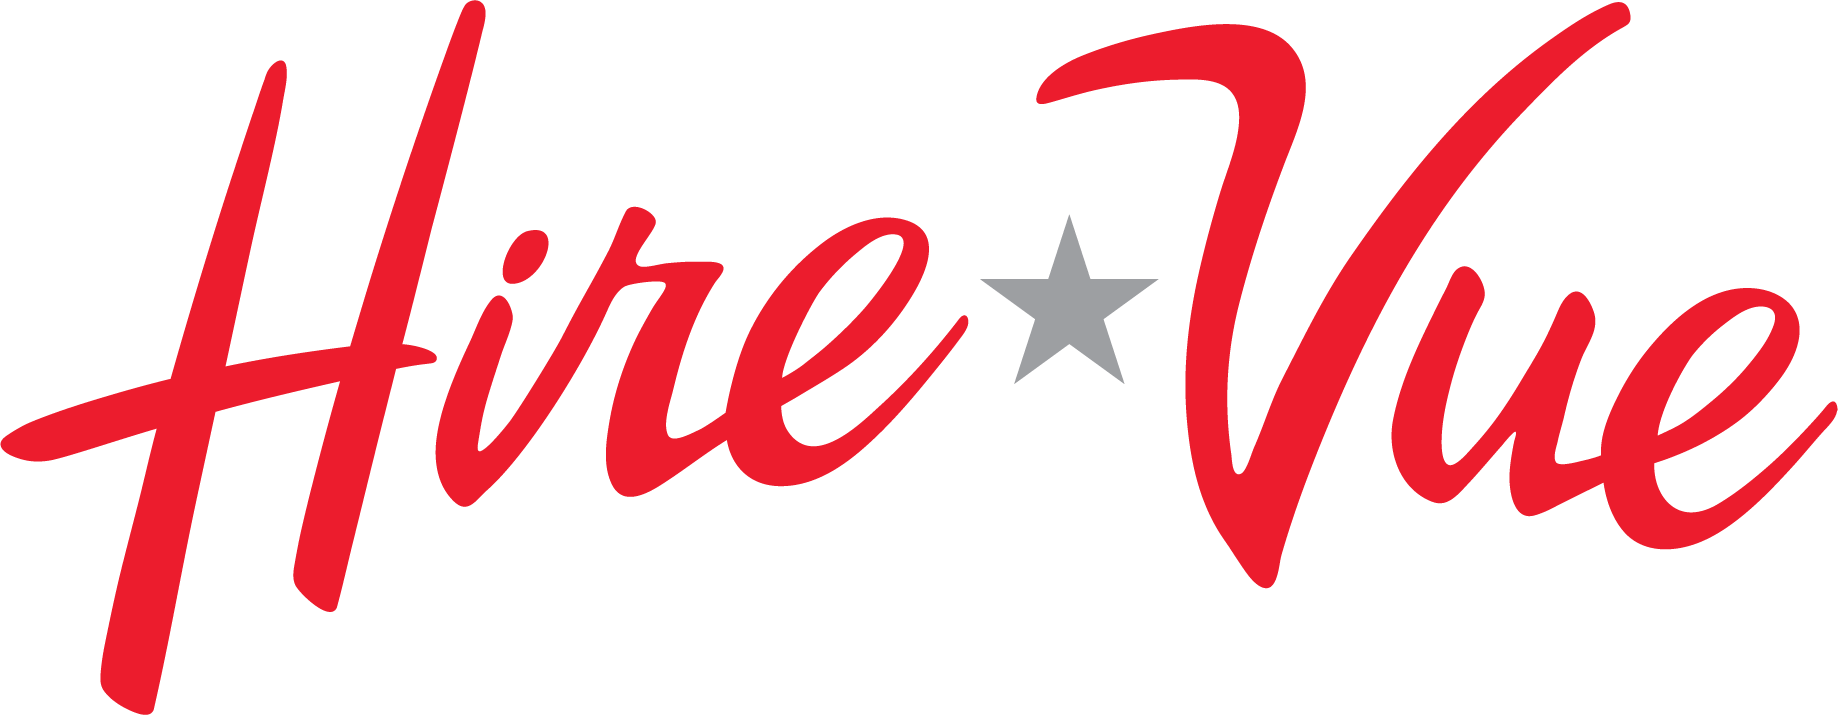 HireVue Logo.png